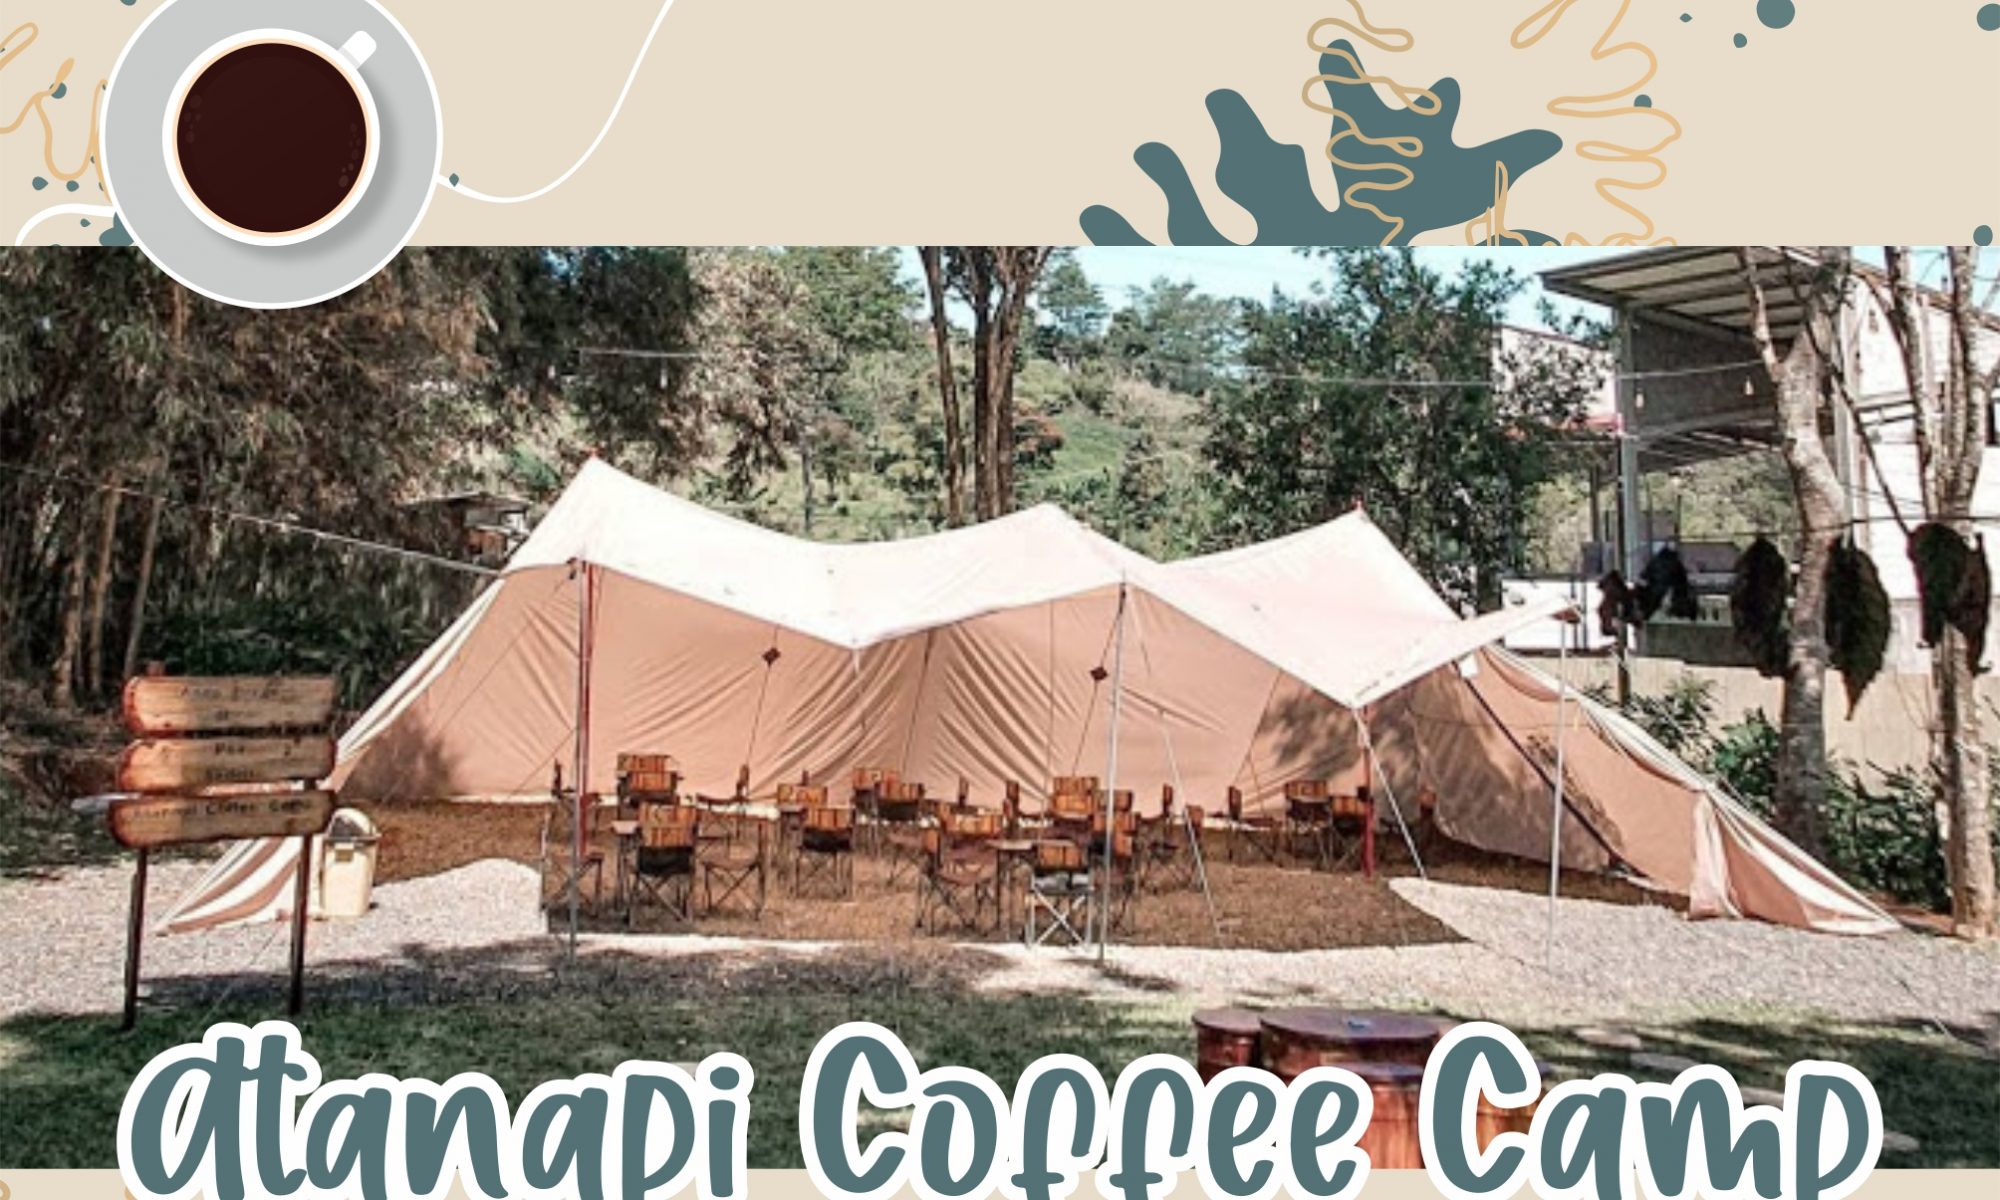 atanapi coffee camp bandung